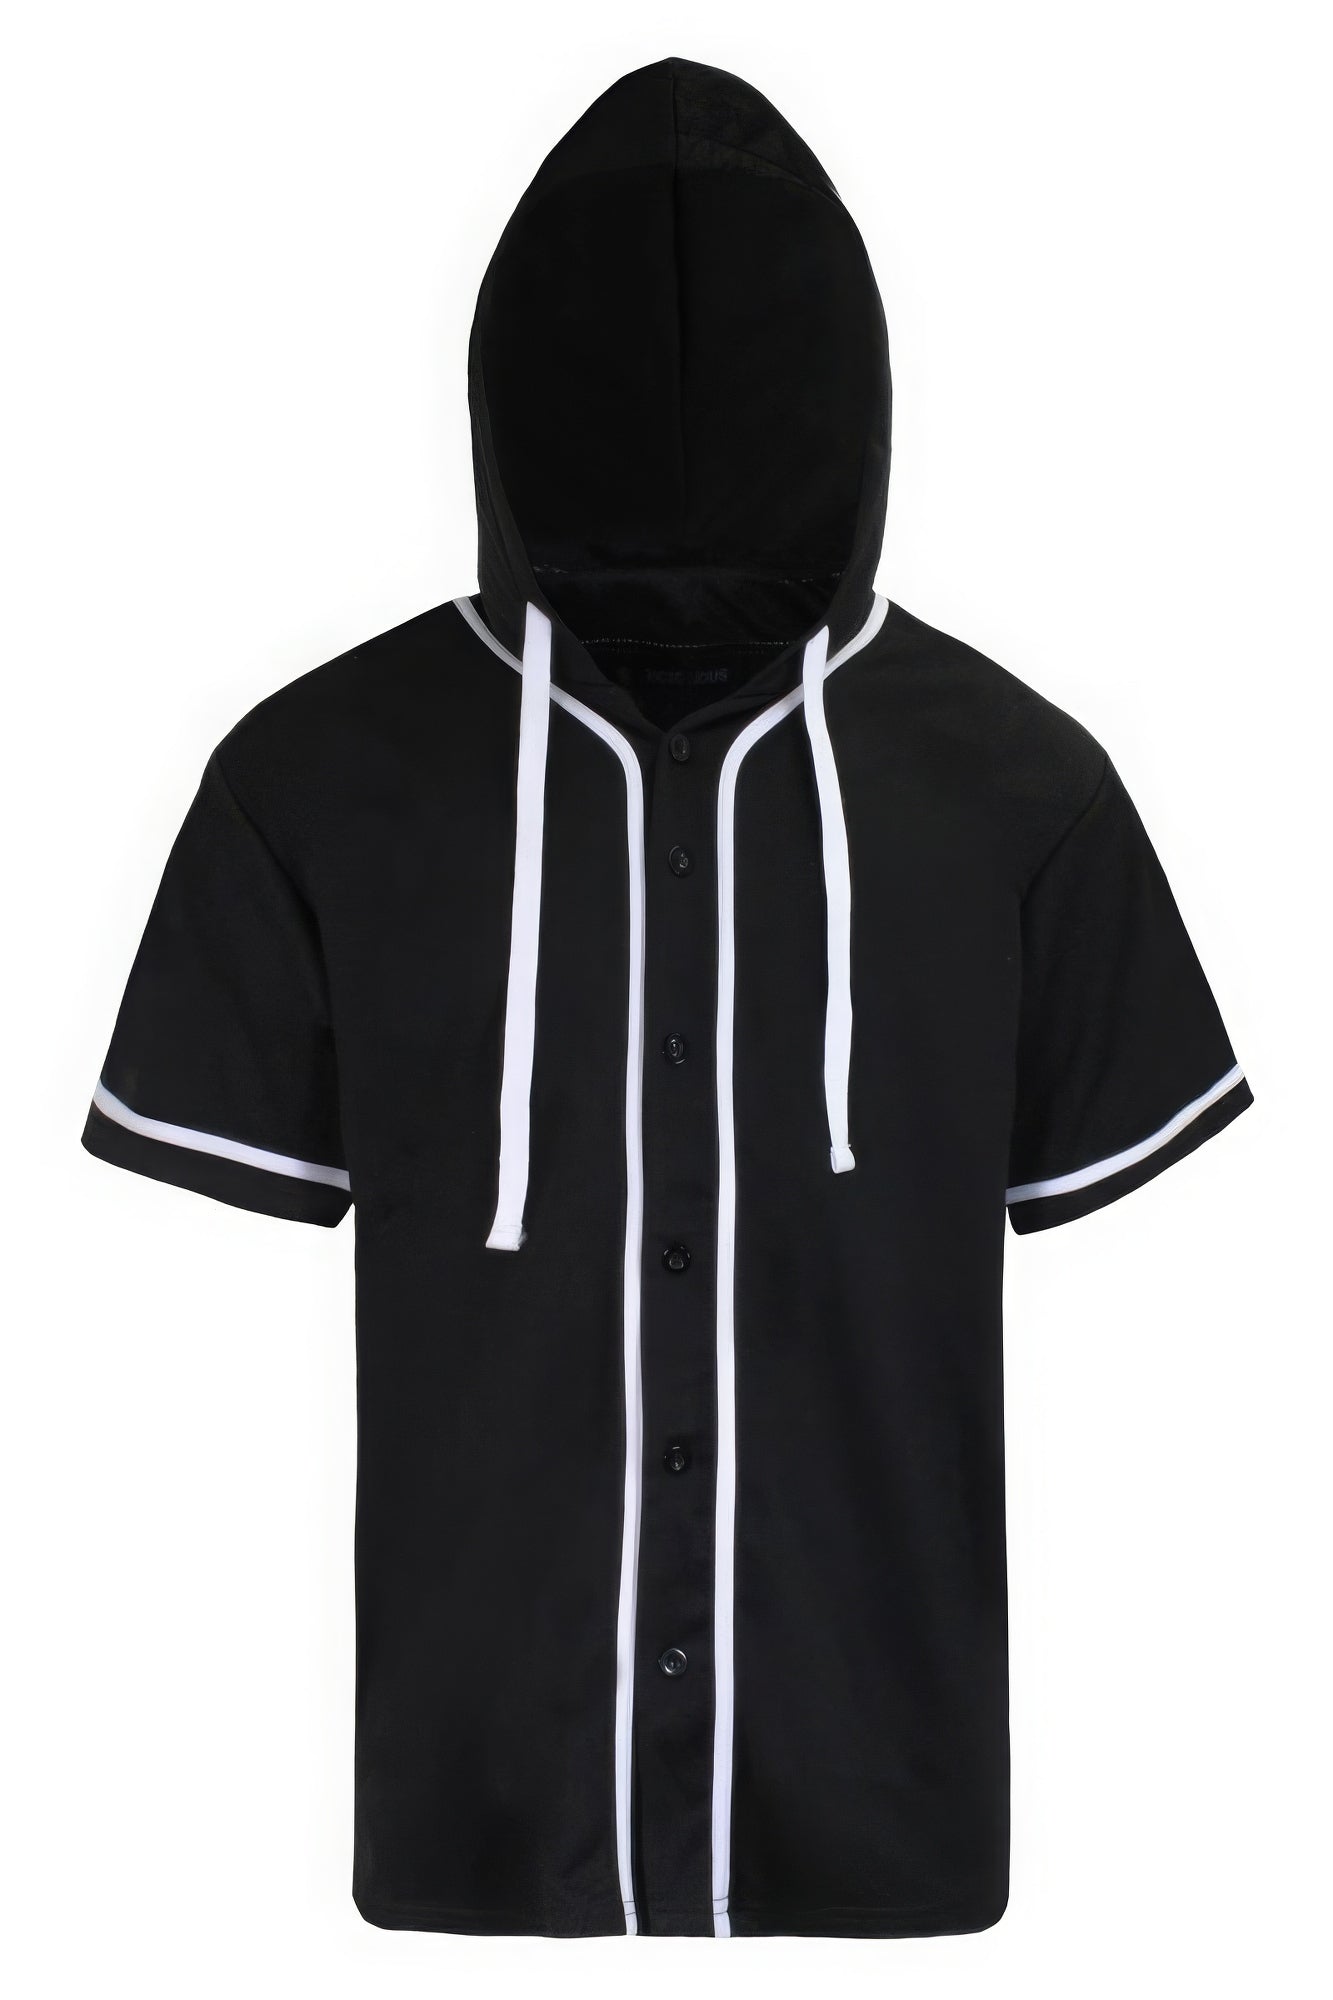 Black - Hooded Baseball Jersey - mens baseball jersey at TFC&H Co.